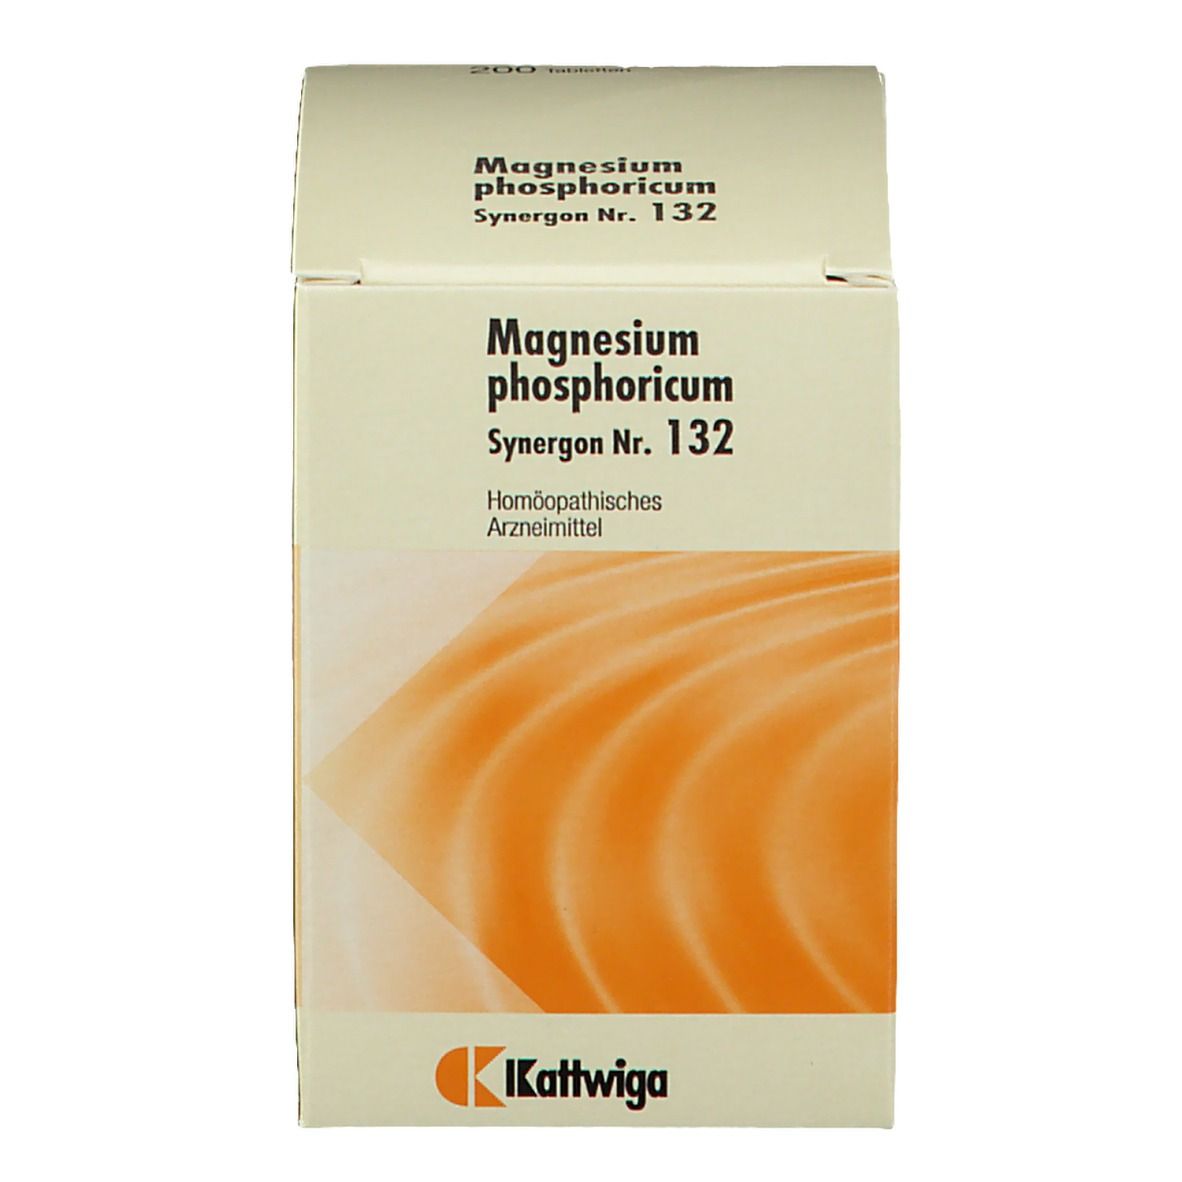 Synergon 132 Magnesium phosphoricum